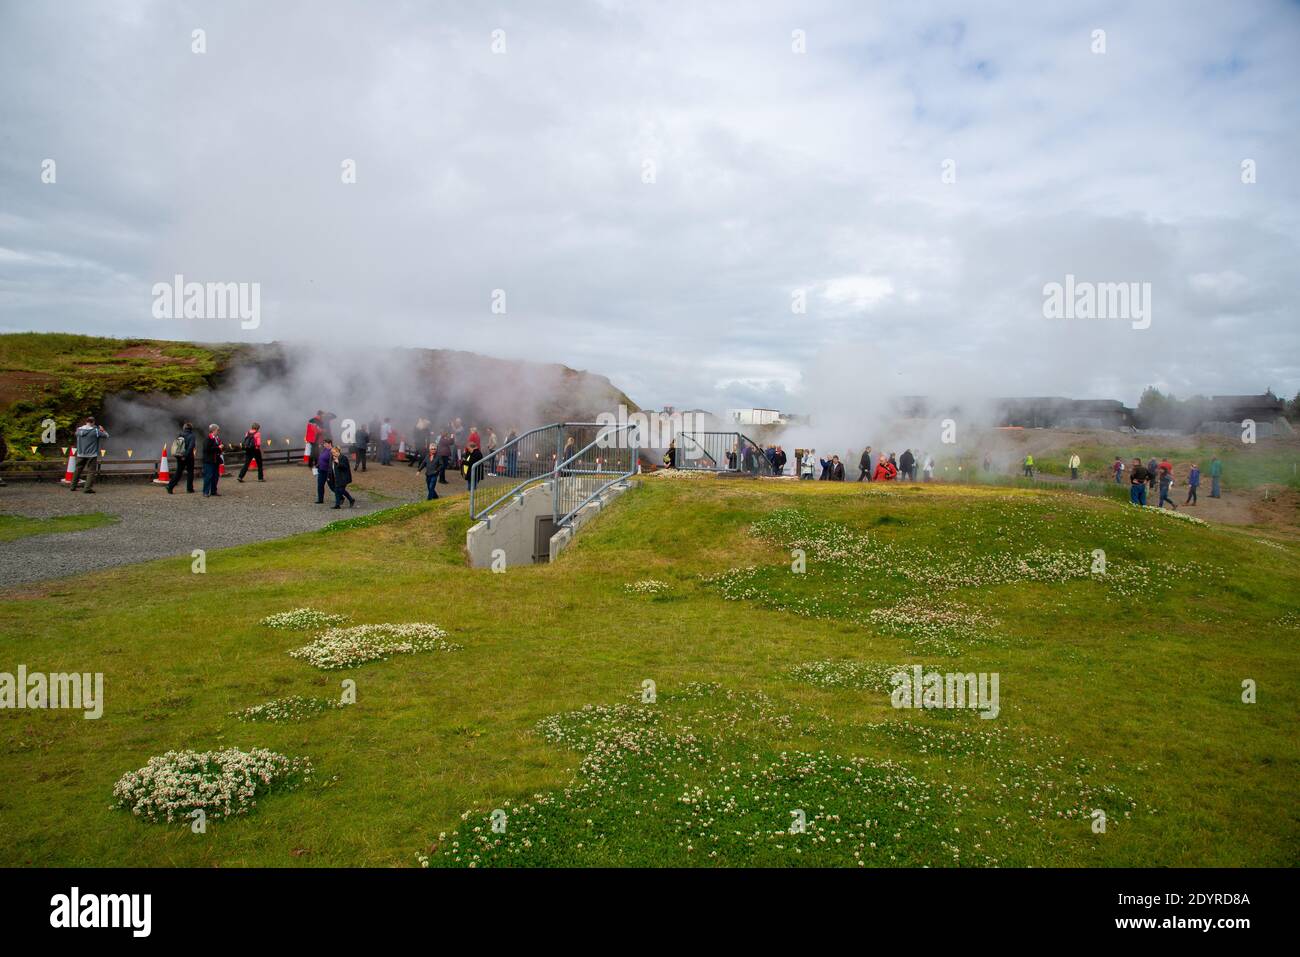 vistors at hot water spring at Deildartunguhver, Iceland Stock Photo